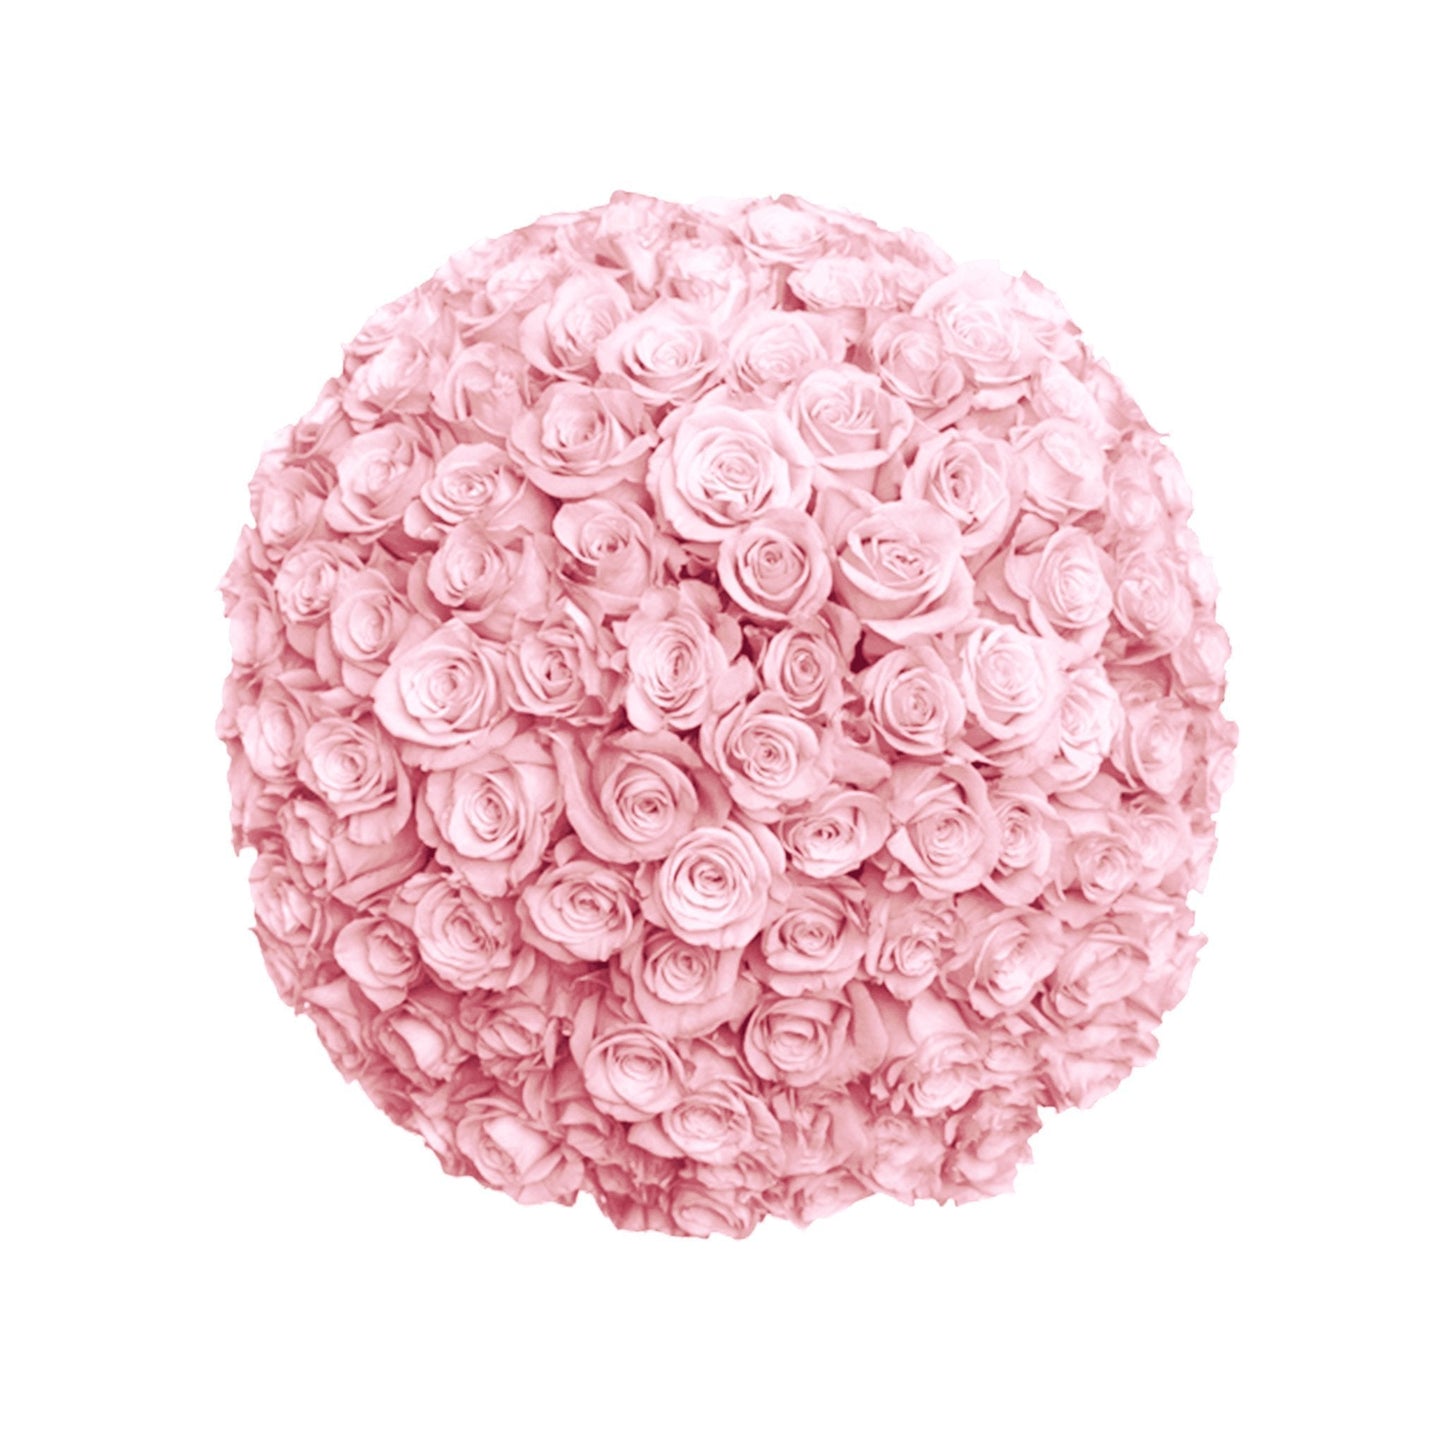 Fresh Roses in a Vase | 100 Light Pink Roses - Floral Arrangement - Flower Delivery Brooklyn